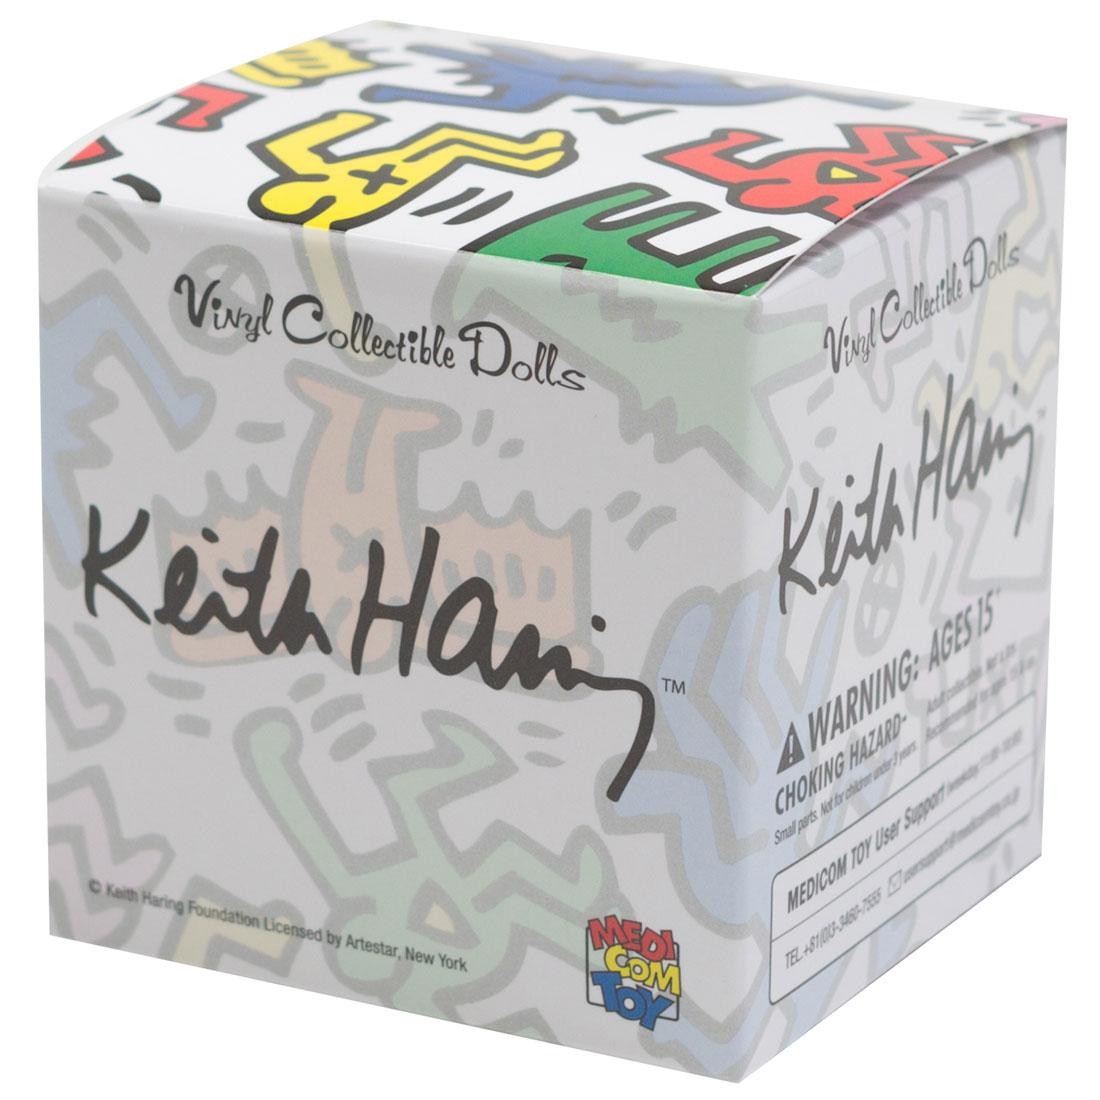 Medicom Mini VCD Keith Haring Figure - 1 Blind Box